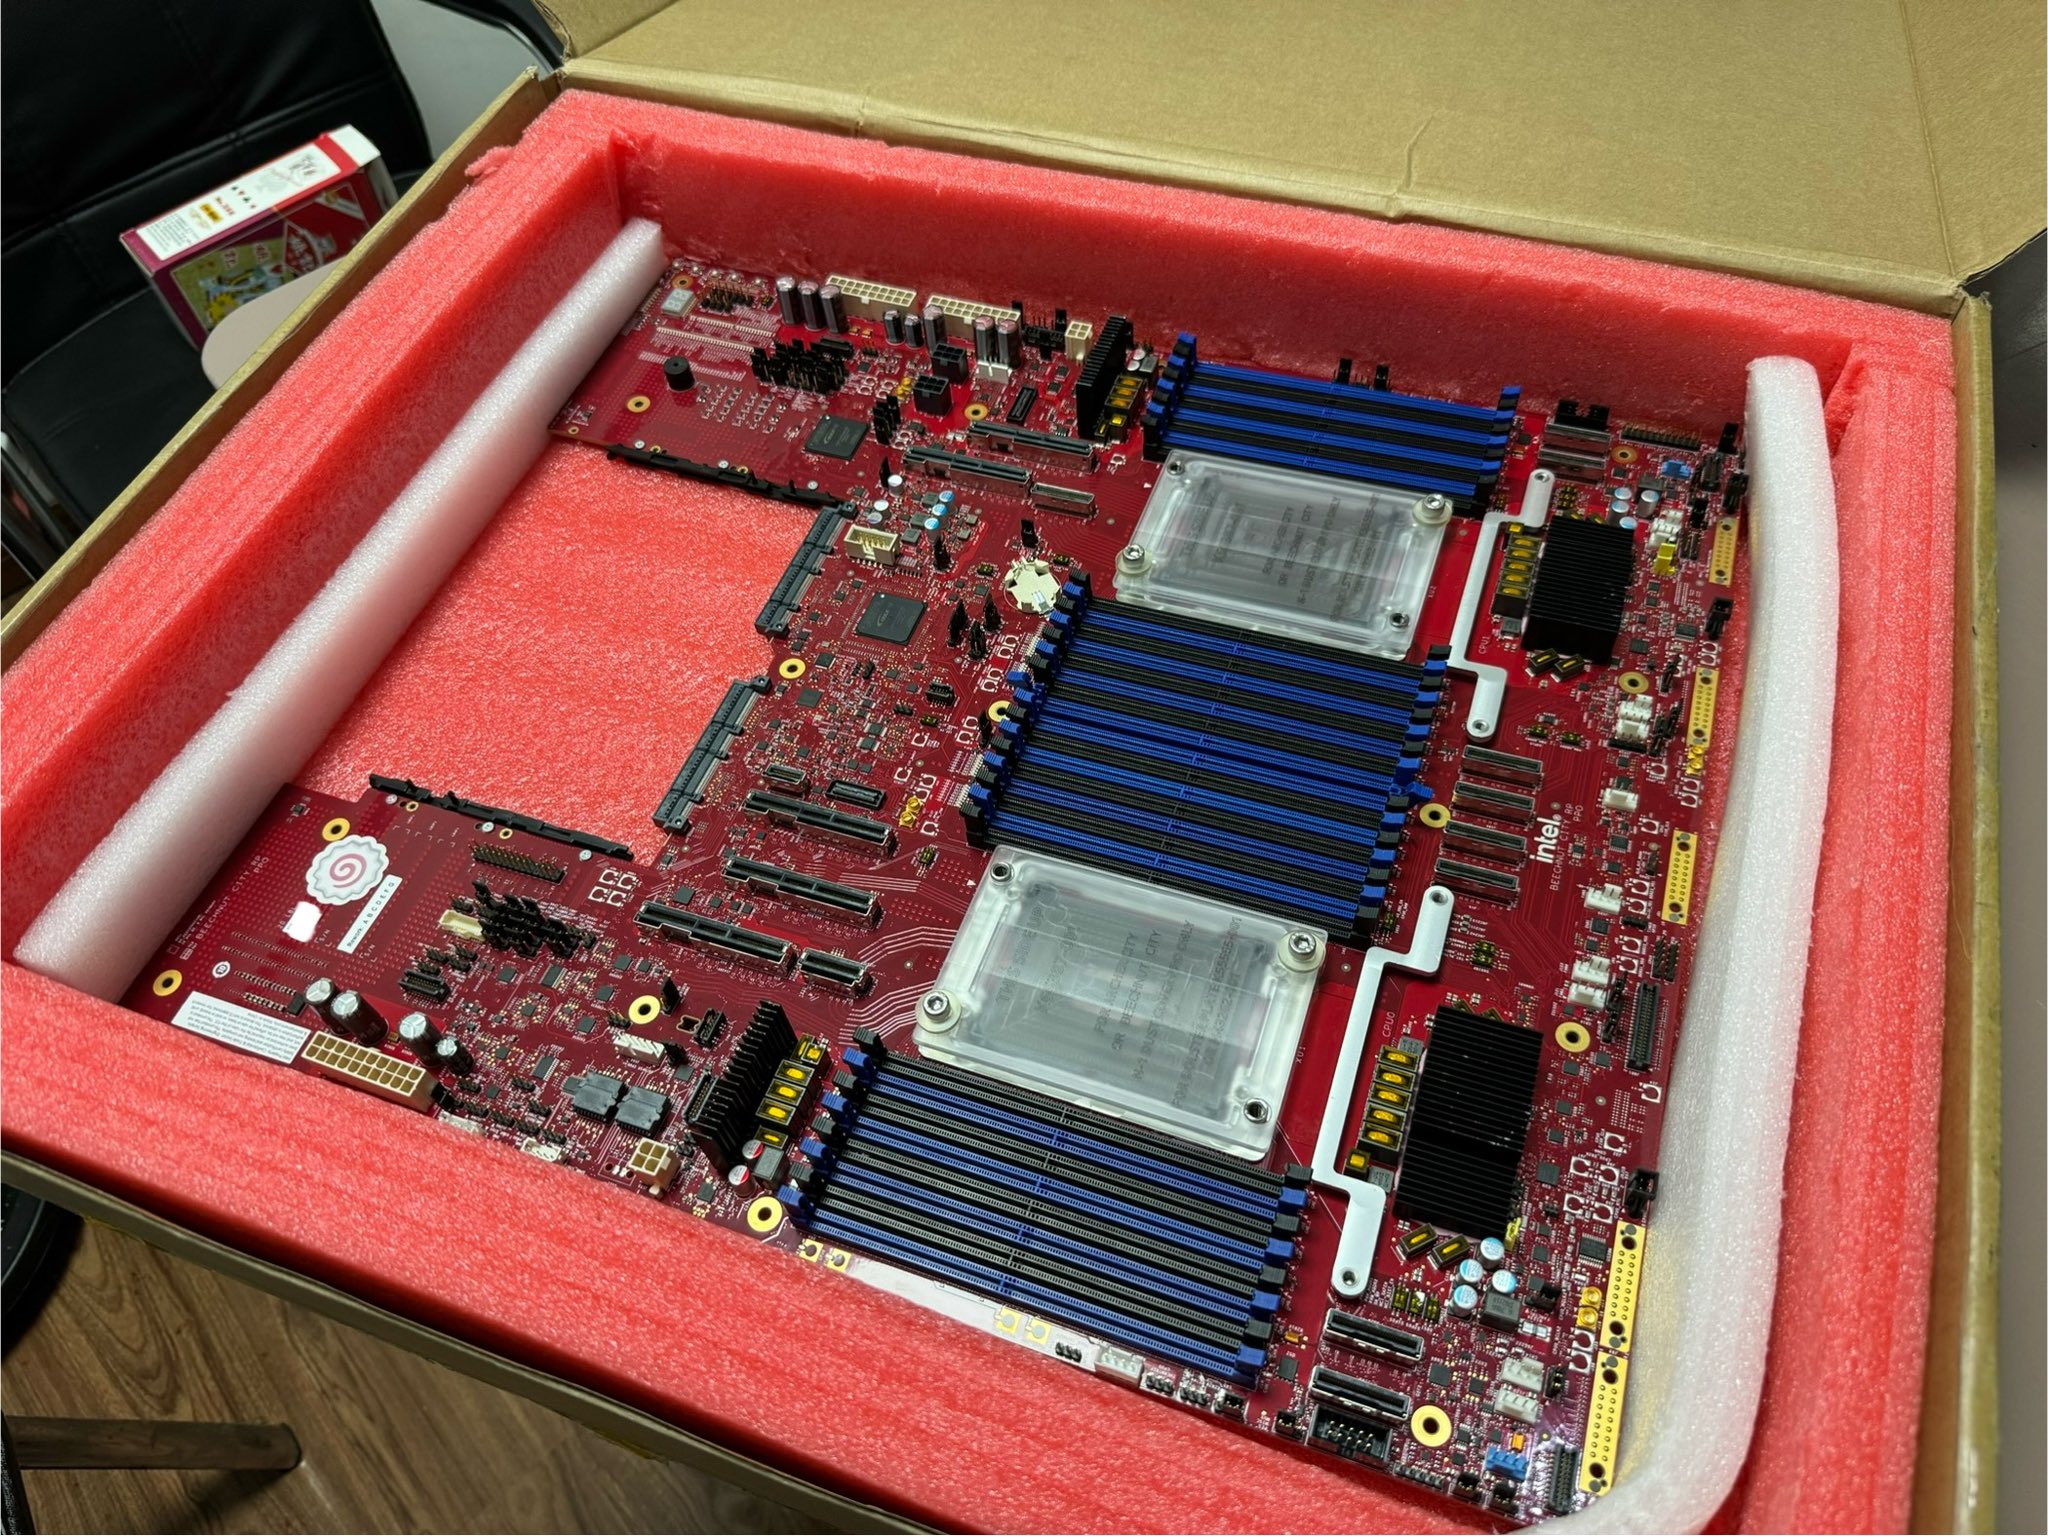 gllzntfbmaa3mir หลุดภาพเมนบอร์ด Intel “Beechnut City” รุ่นใหม่ที่ออกมาสำหรับซีพียู Intel Xeon 6 “Granite Rapids” และ “Sierra Forest”